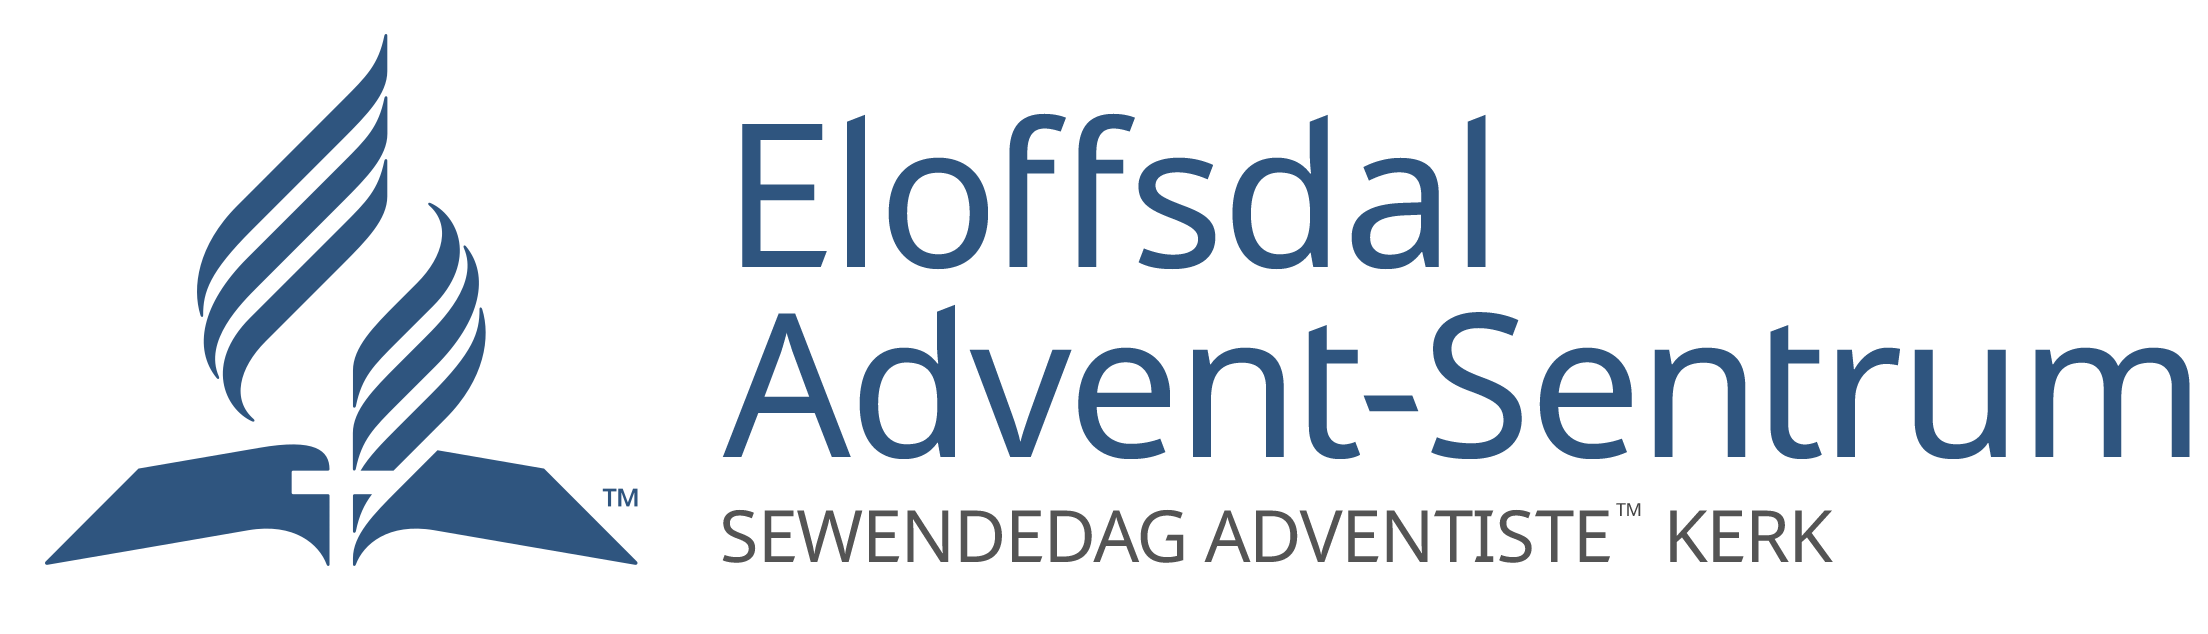 Eloffsdal Advent-Sentrum (Sewendedag Adventiste Kerk/SDA)